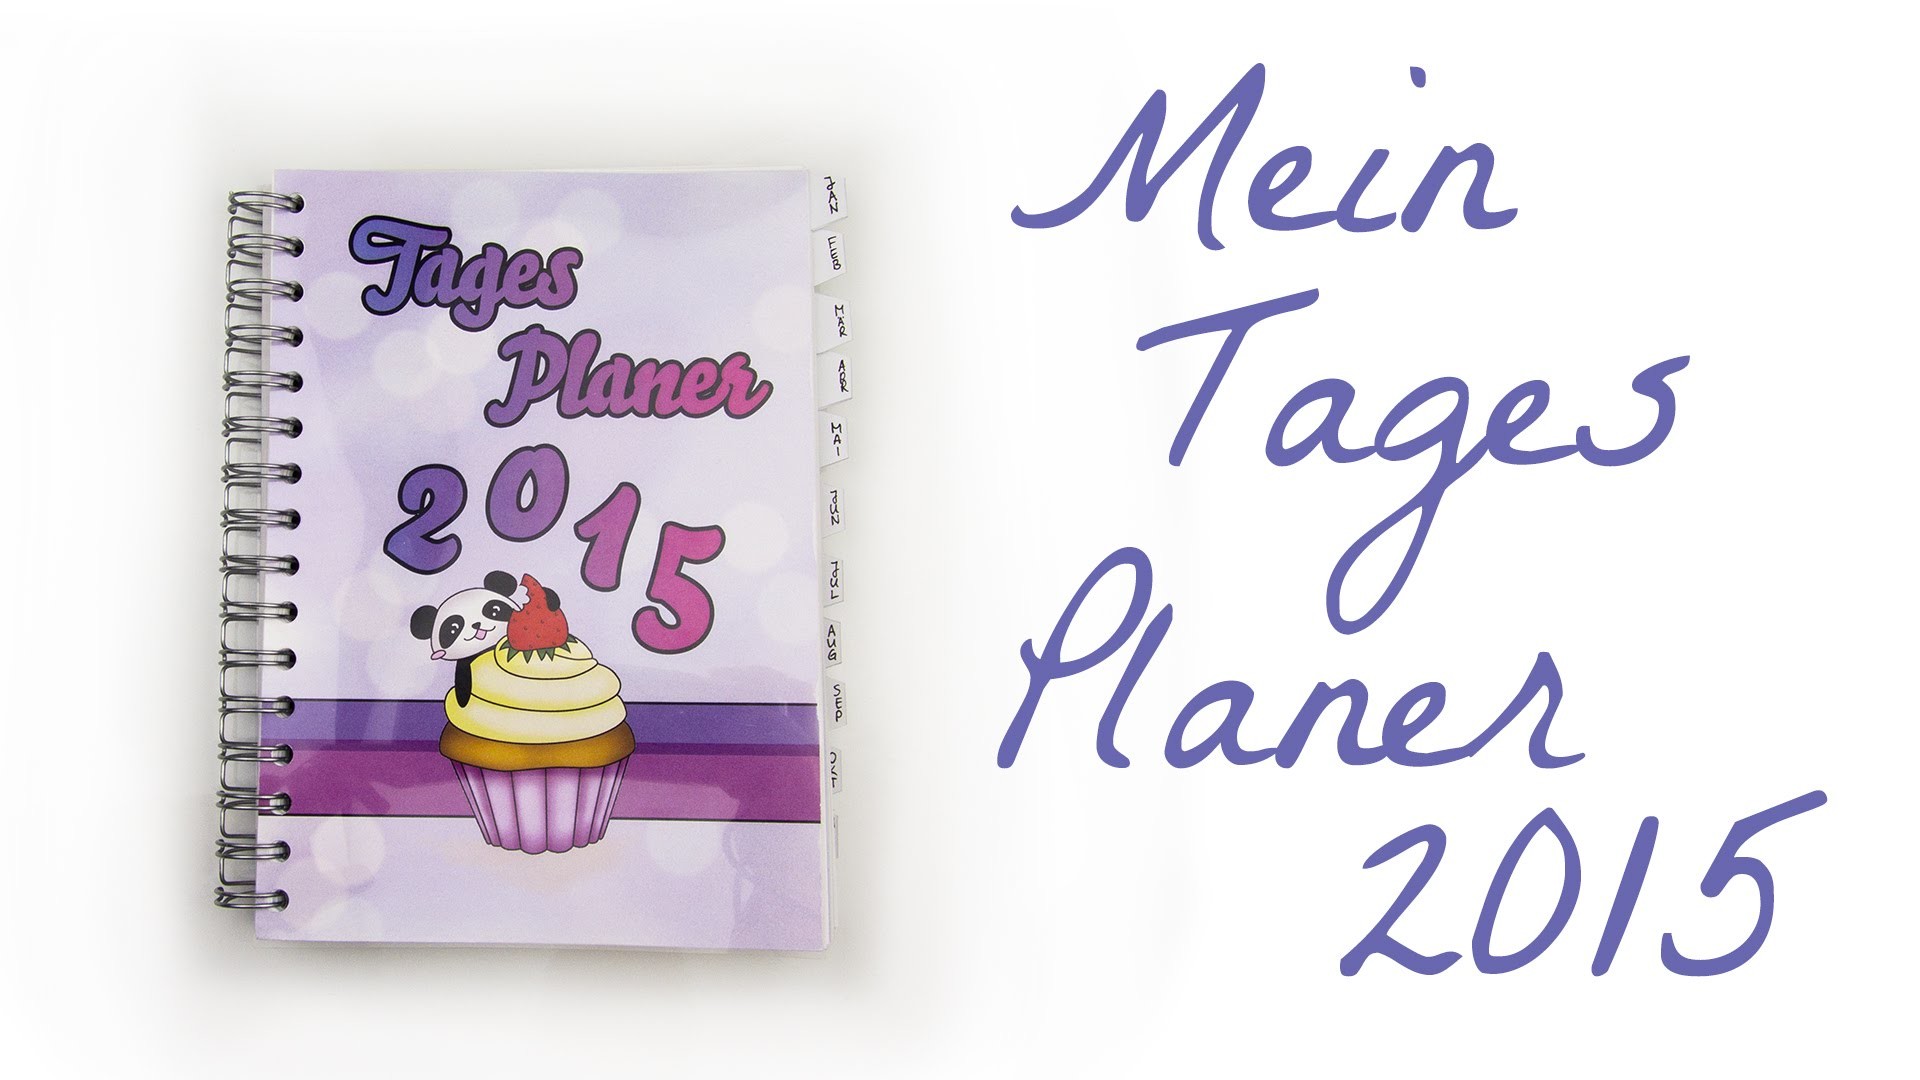 Mein Tages Planer 2015 | Life Planner | Organizer | Kalender